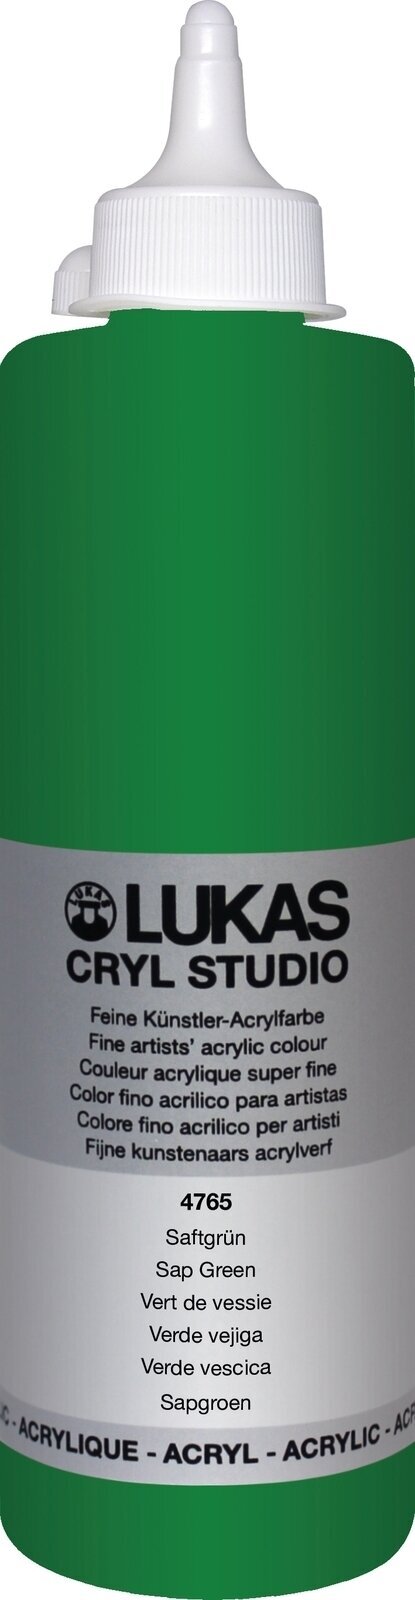 Acrylic Paint Lukas Cryl Studio Acrylic Paint Plastic Bottle Acrylic Paint Sap Green 500 ml 1 pc